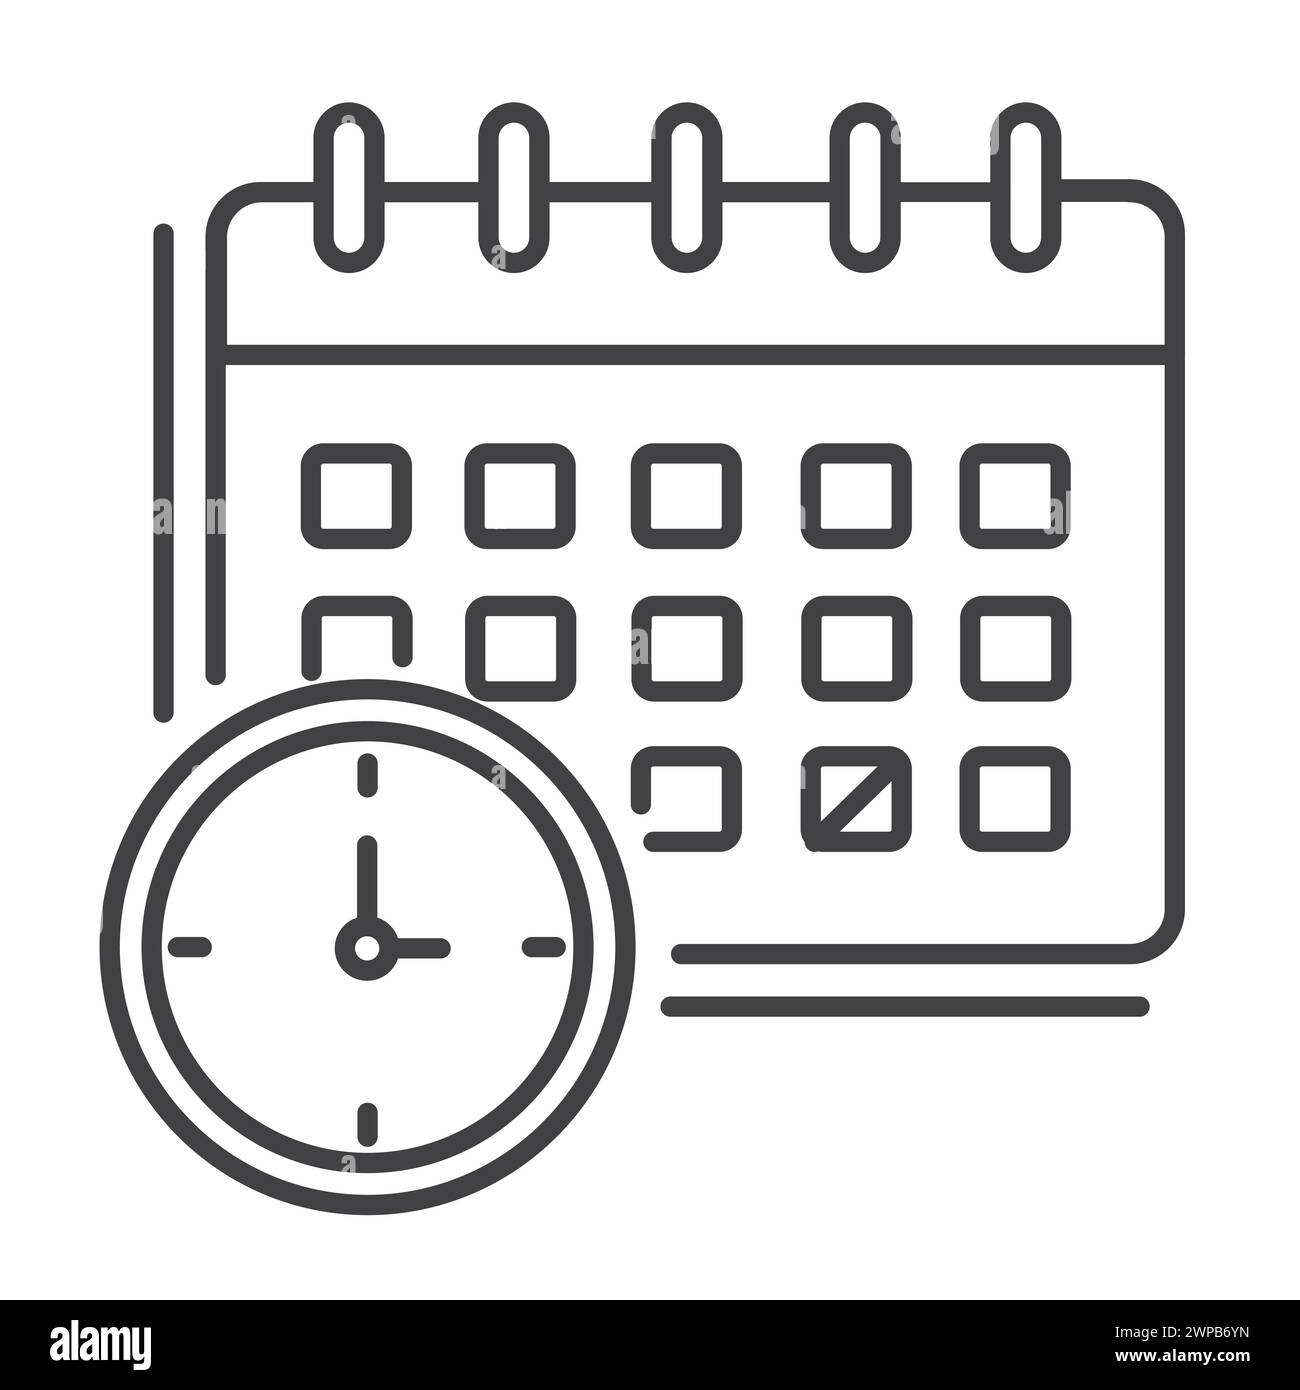 Deadline Schedule Calender Vector Illustration icon Design Stock Vector